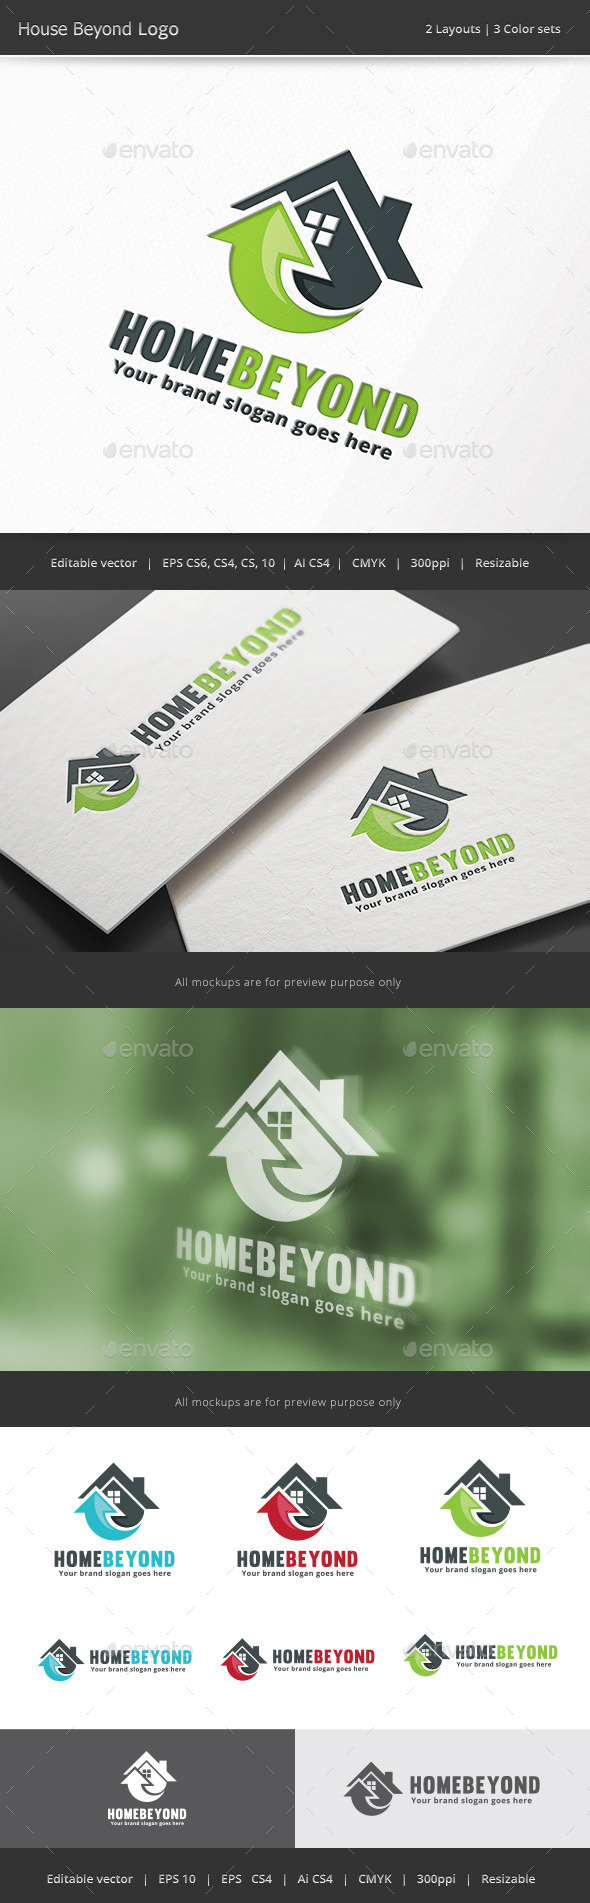 Home Beyond Logo